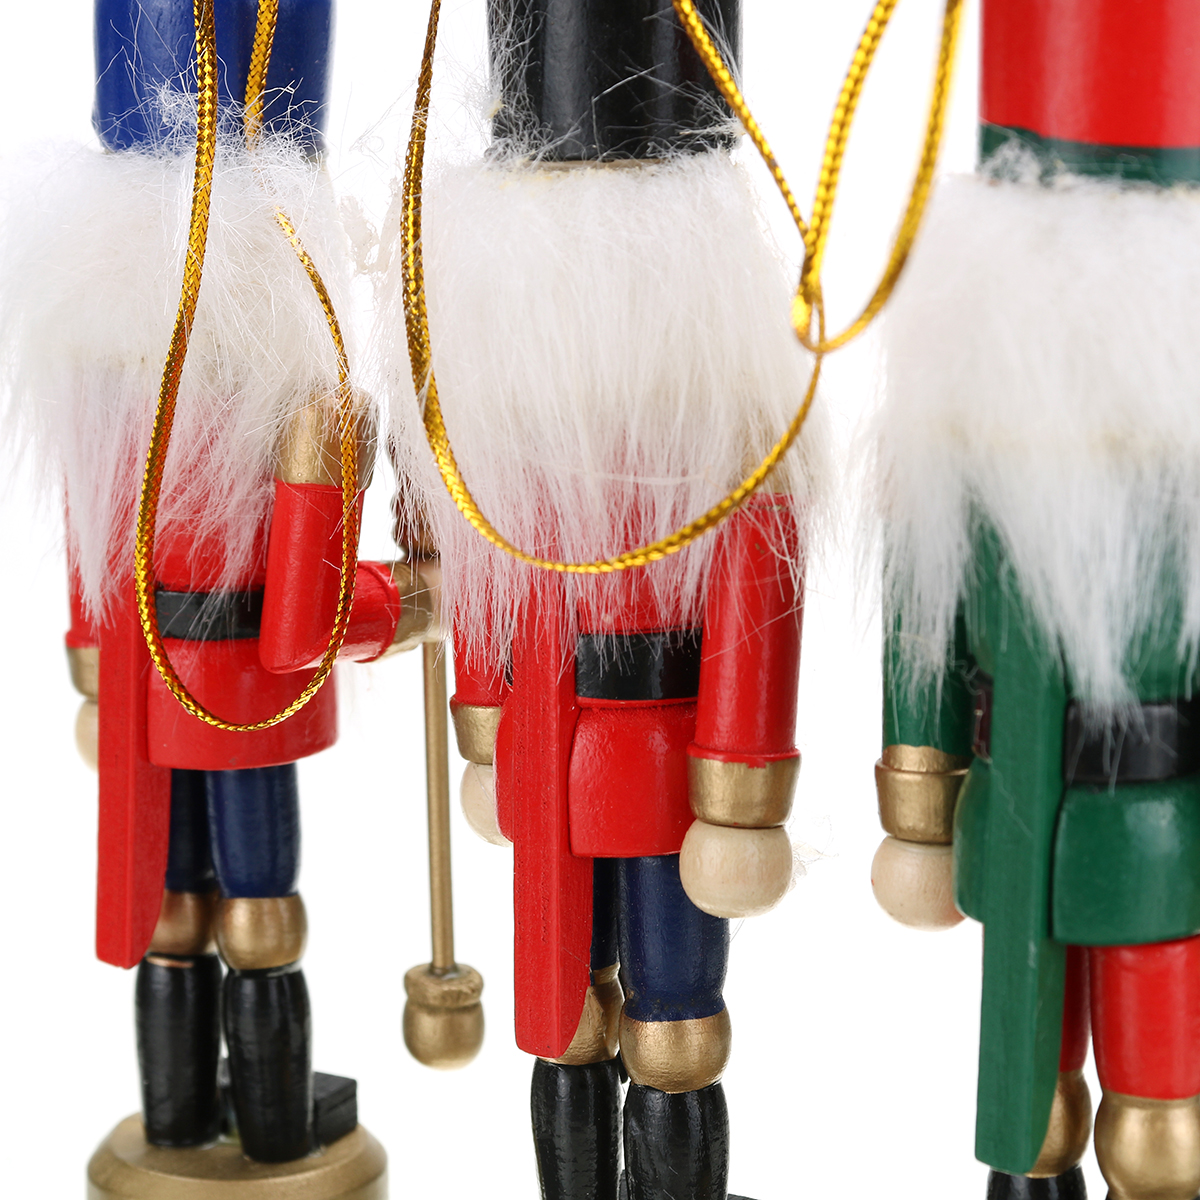 Wooden-Nutcracker-Doll-Soldier-Vintage-Handcraft-Decoration-Christmas-Gifts-1787904-13